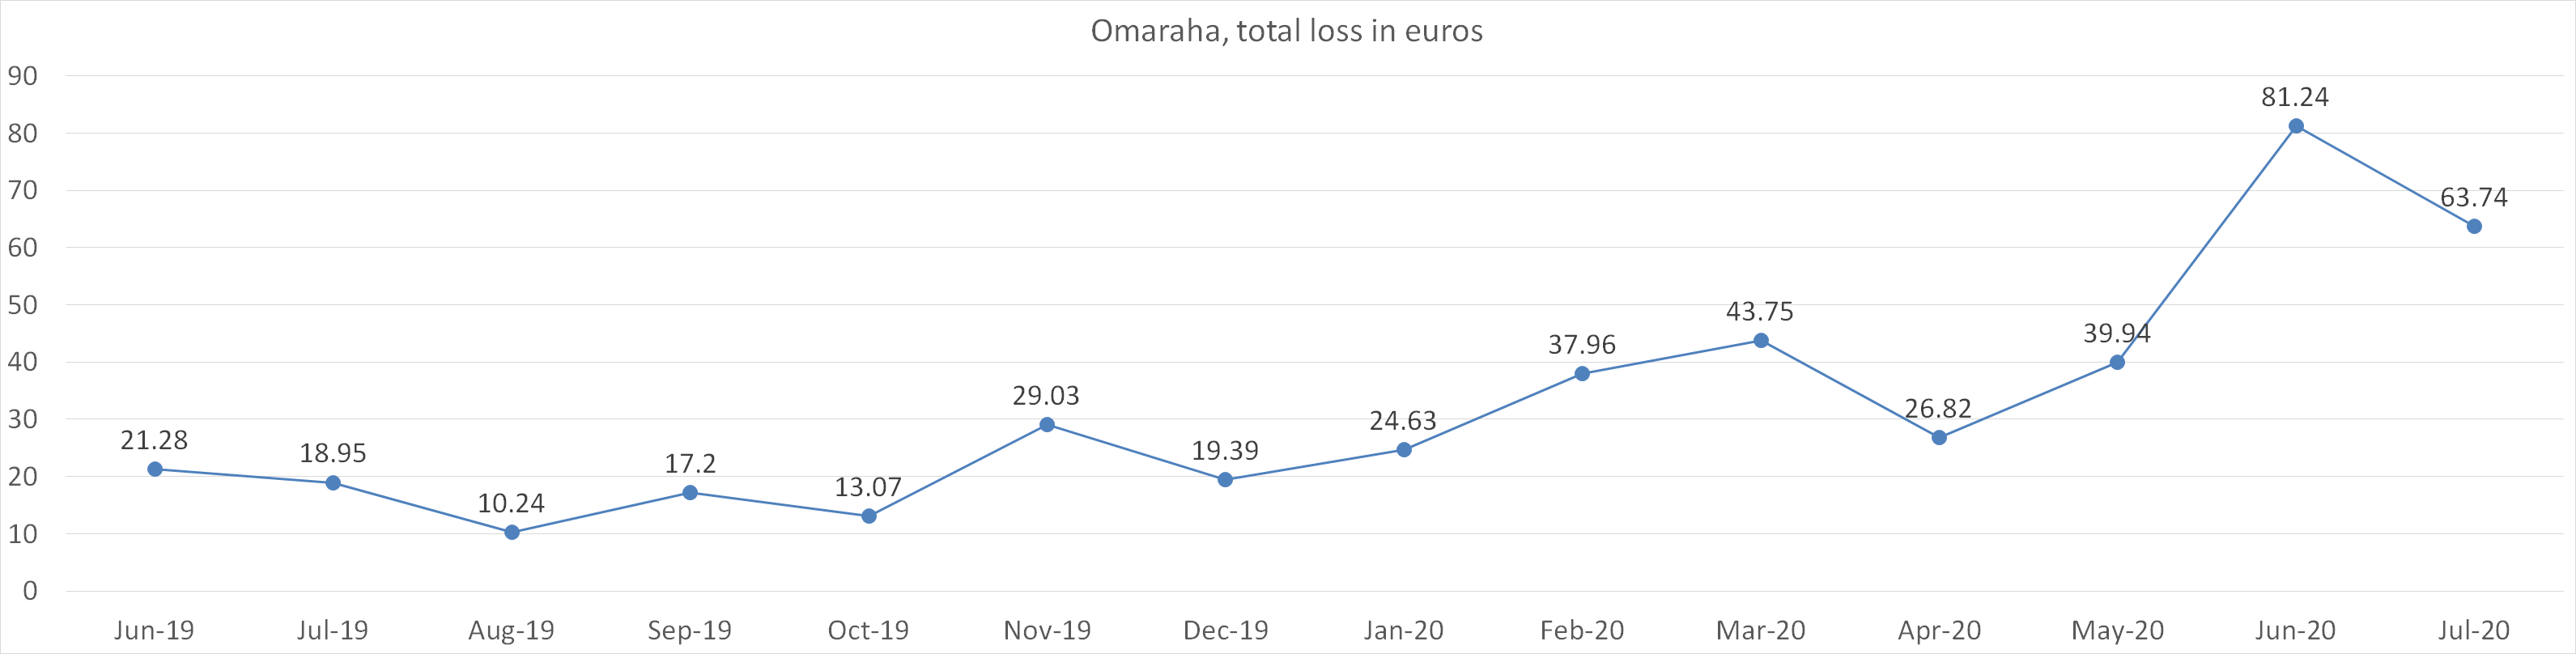 Omaraha total loss in euros july 2020